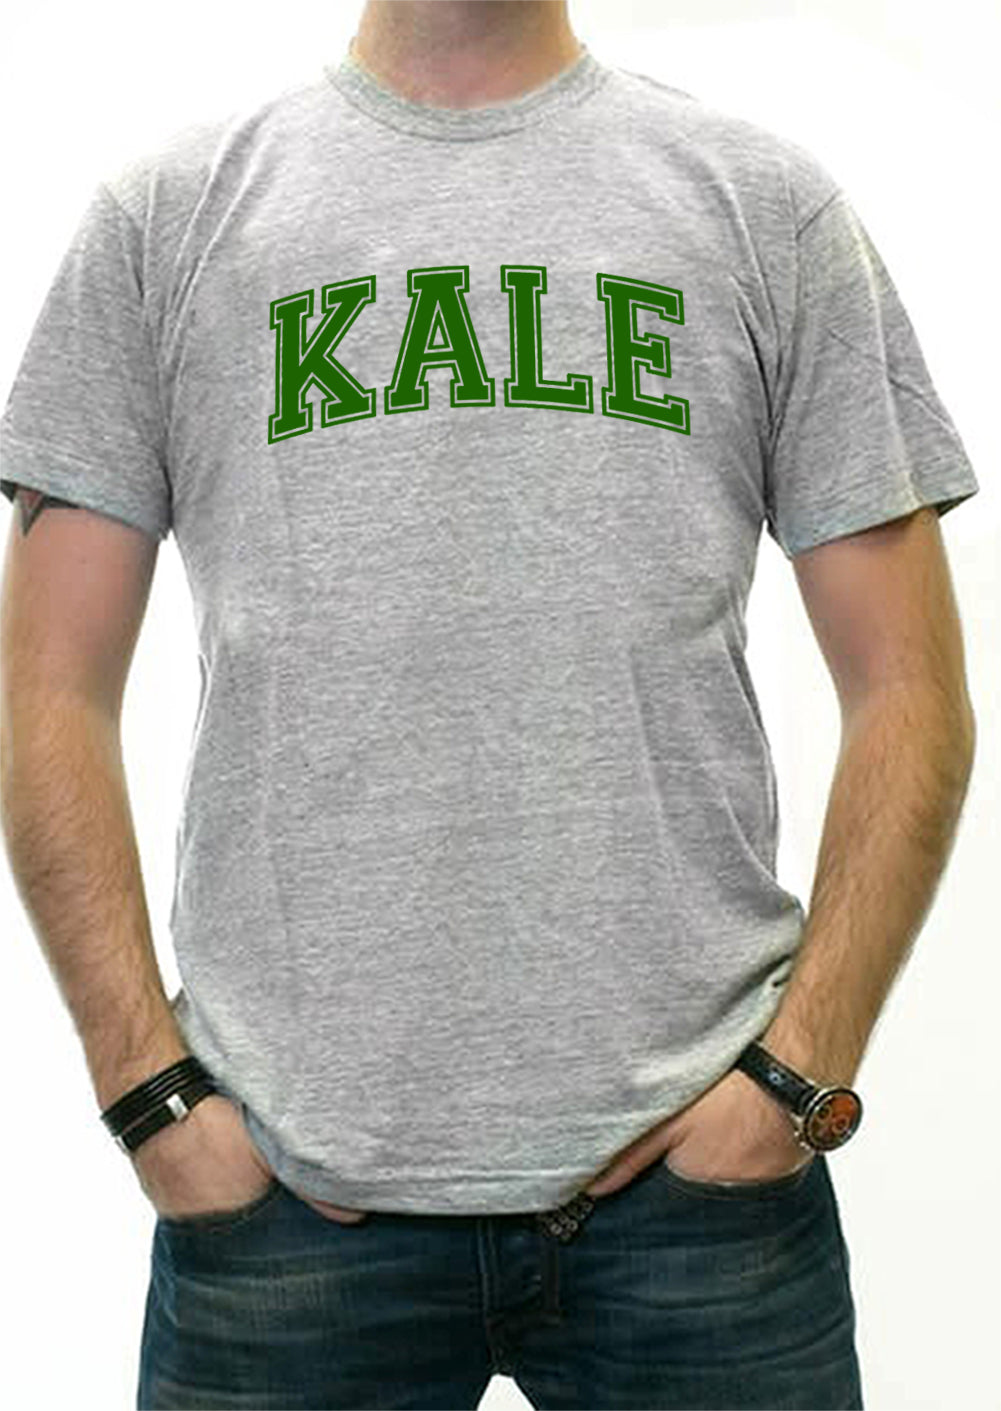 Kale -  Kale Men's T-Shirt